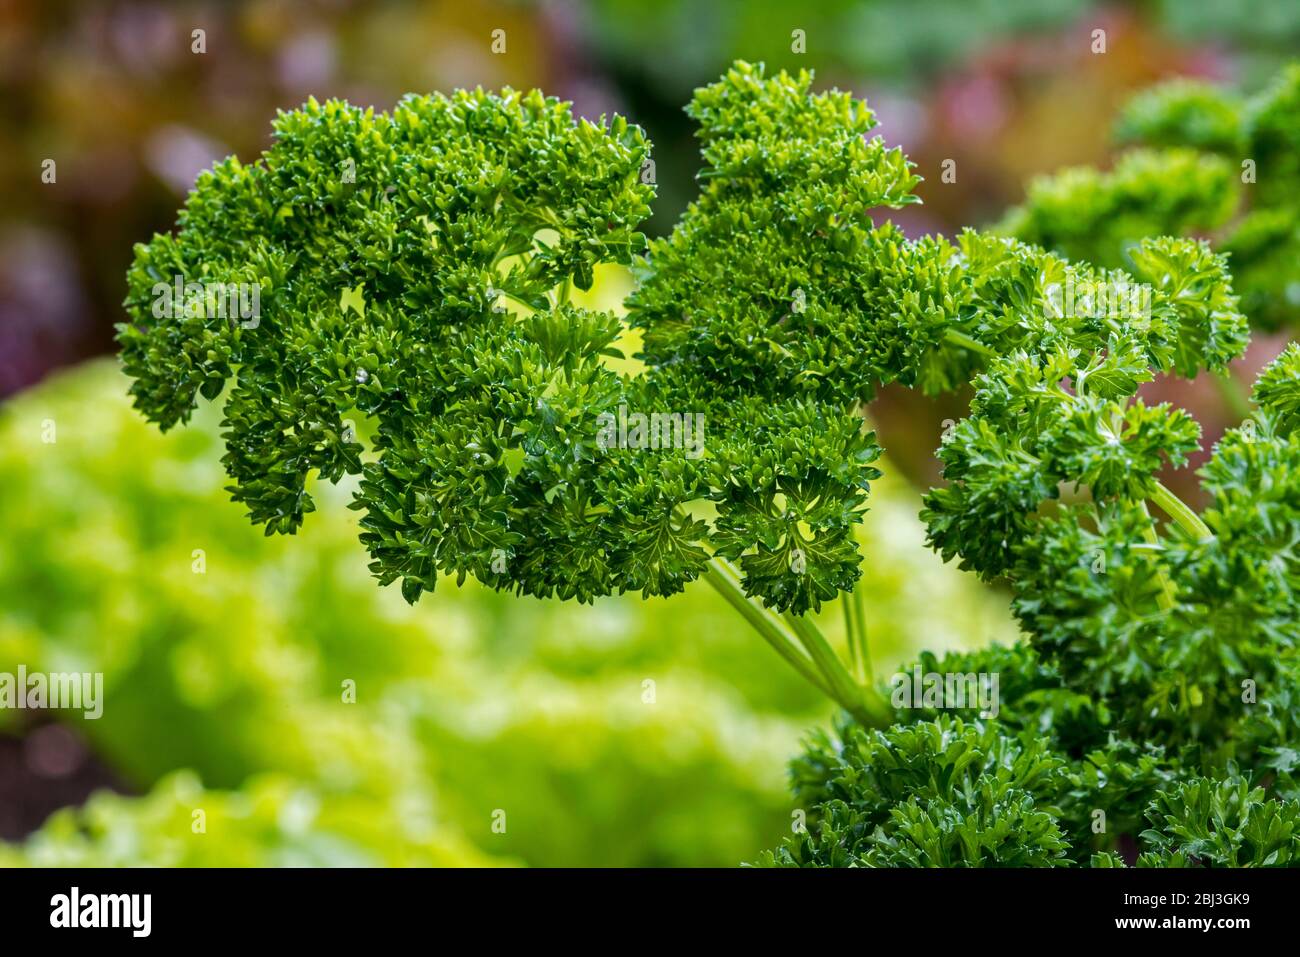 Garden parsley (Petroselinum crispum) close up of leaves Stock Photo